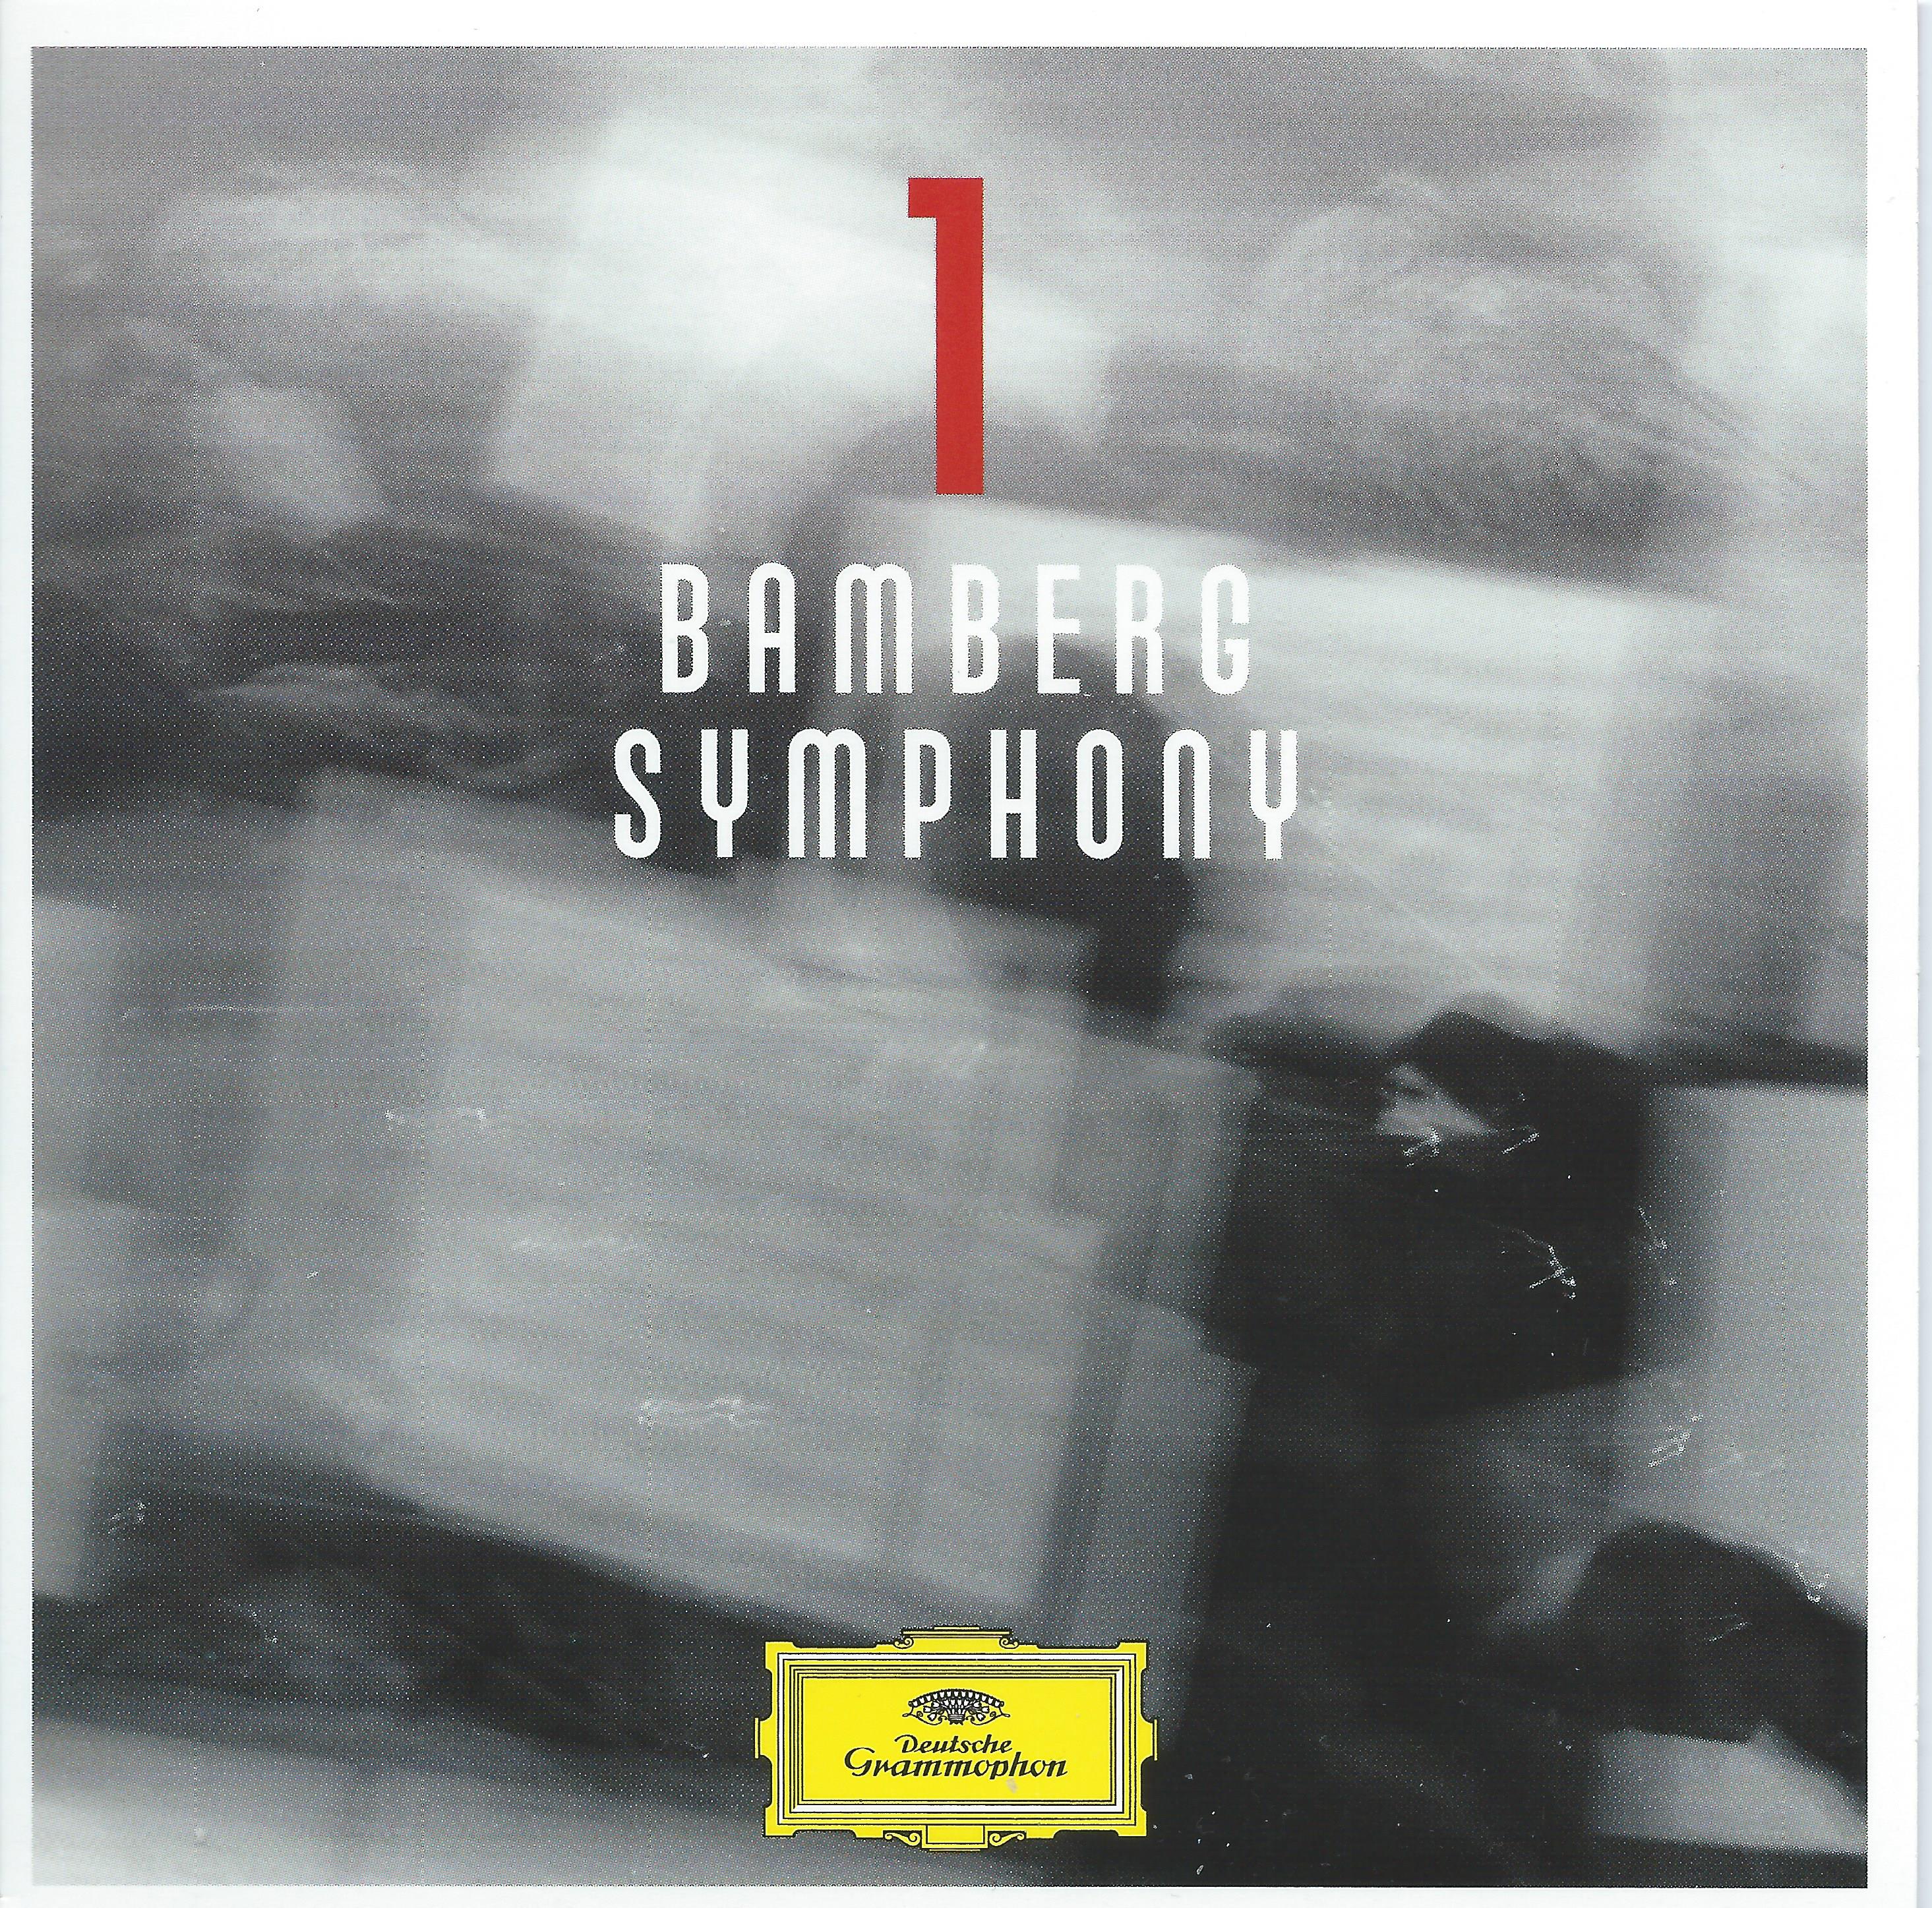 Bamberg Symphony - The First 70 Years (2016 Deutsche Grammophon) 17cd